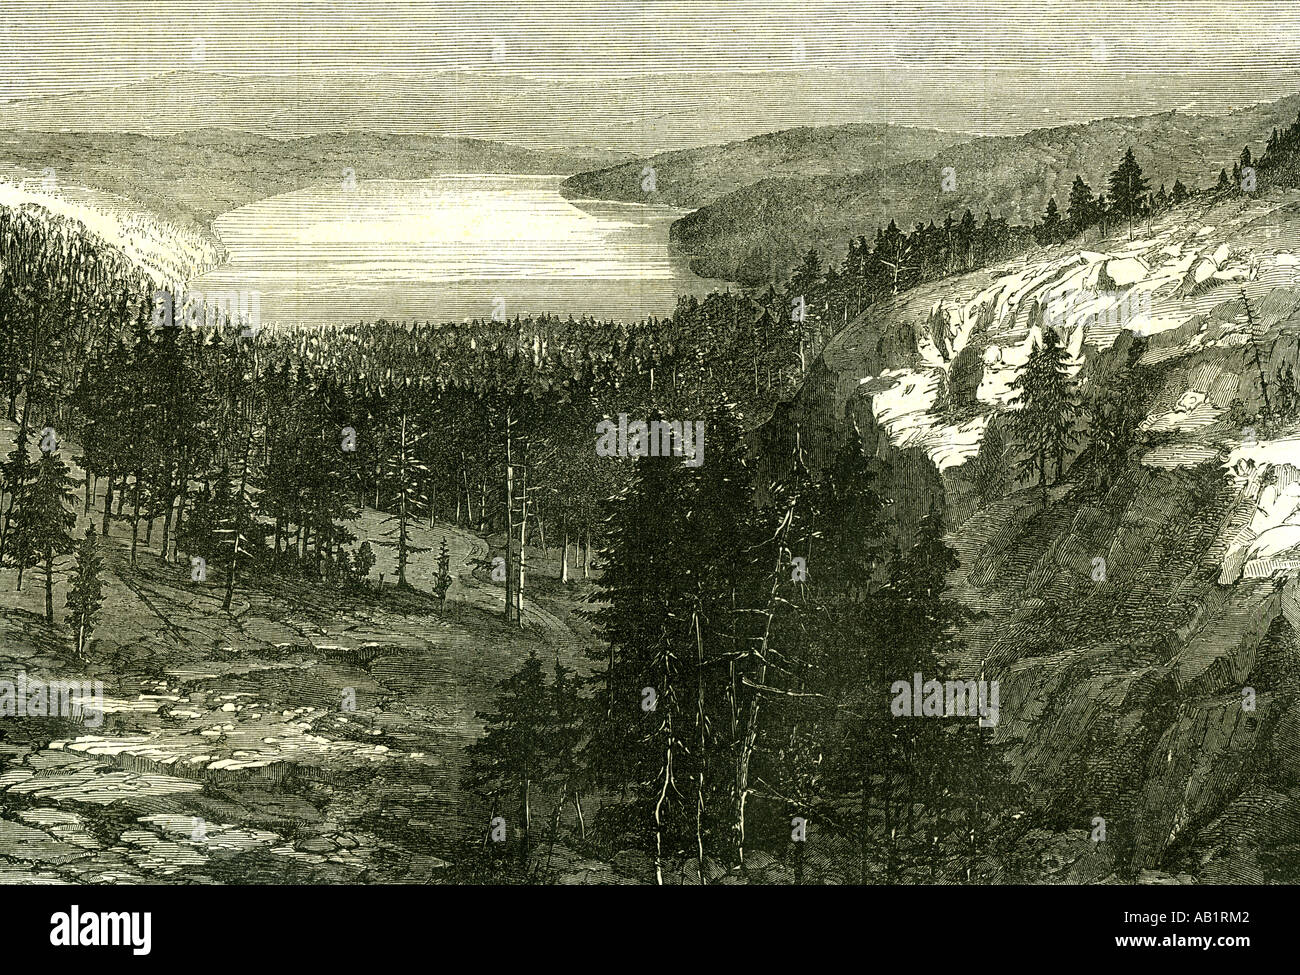 Donner Lake U S A 1868 United States United States of America Stock Photo